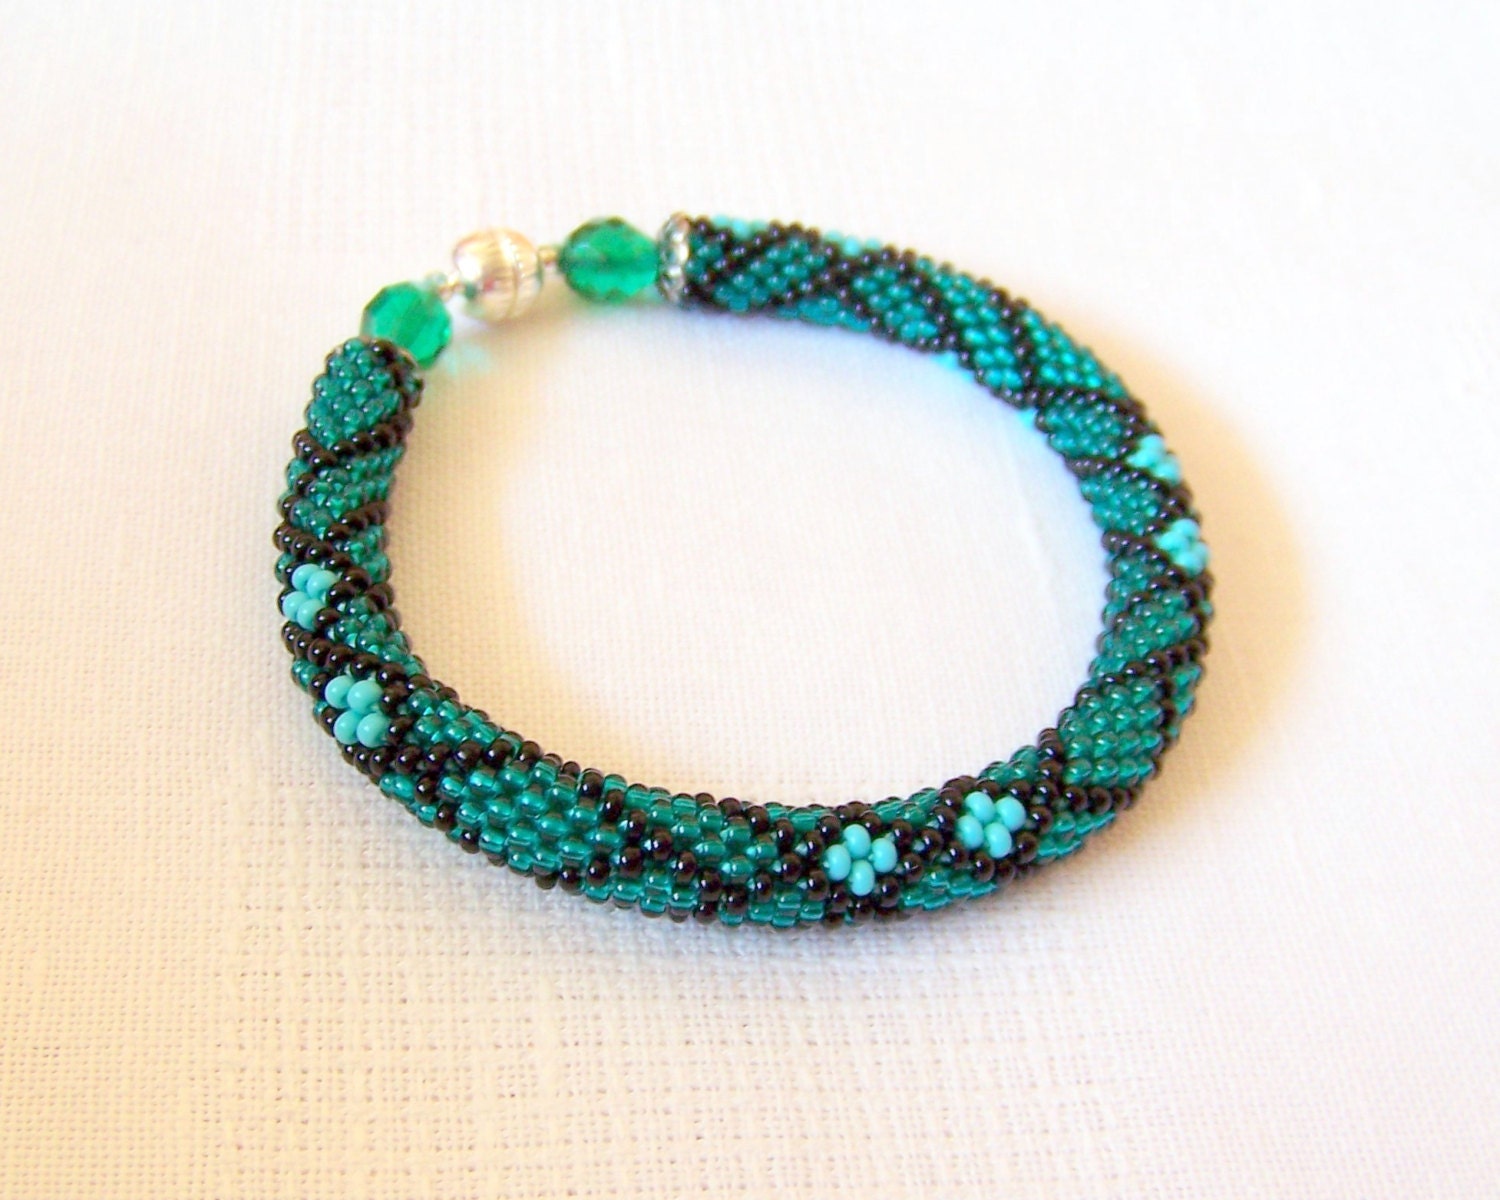 SALE - Bead Crochet Bracelet - Beadwork - Round Chunky Bangle - Geometric Design Bracelet - emerald green, turquoise and black - lutita